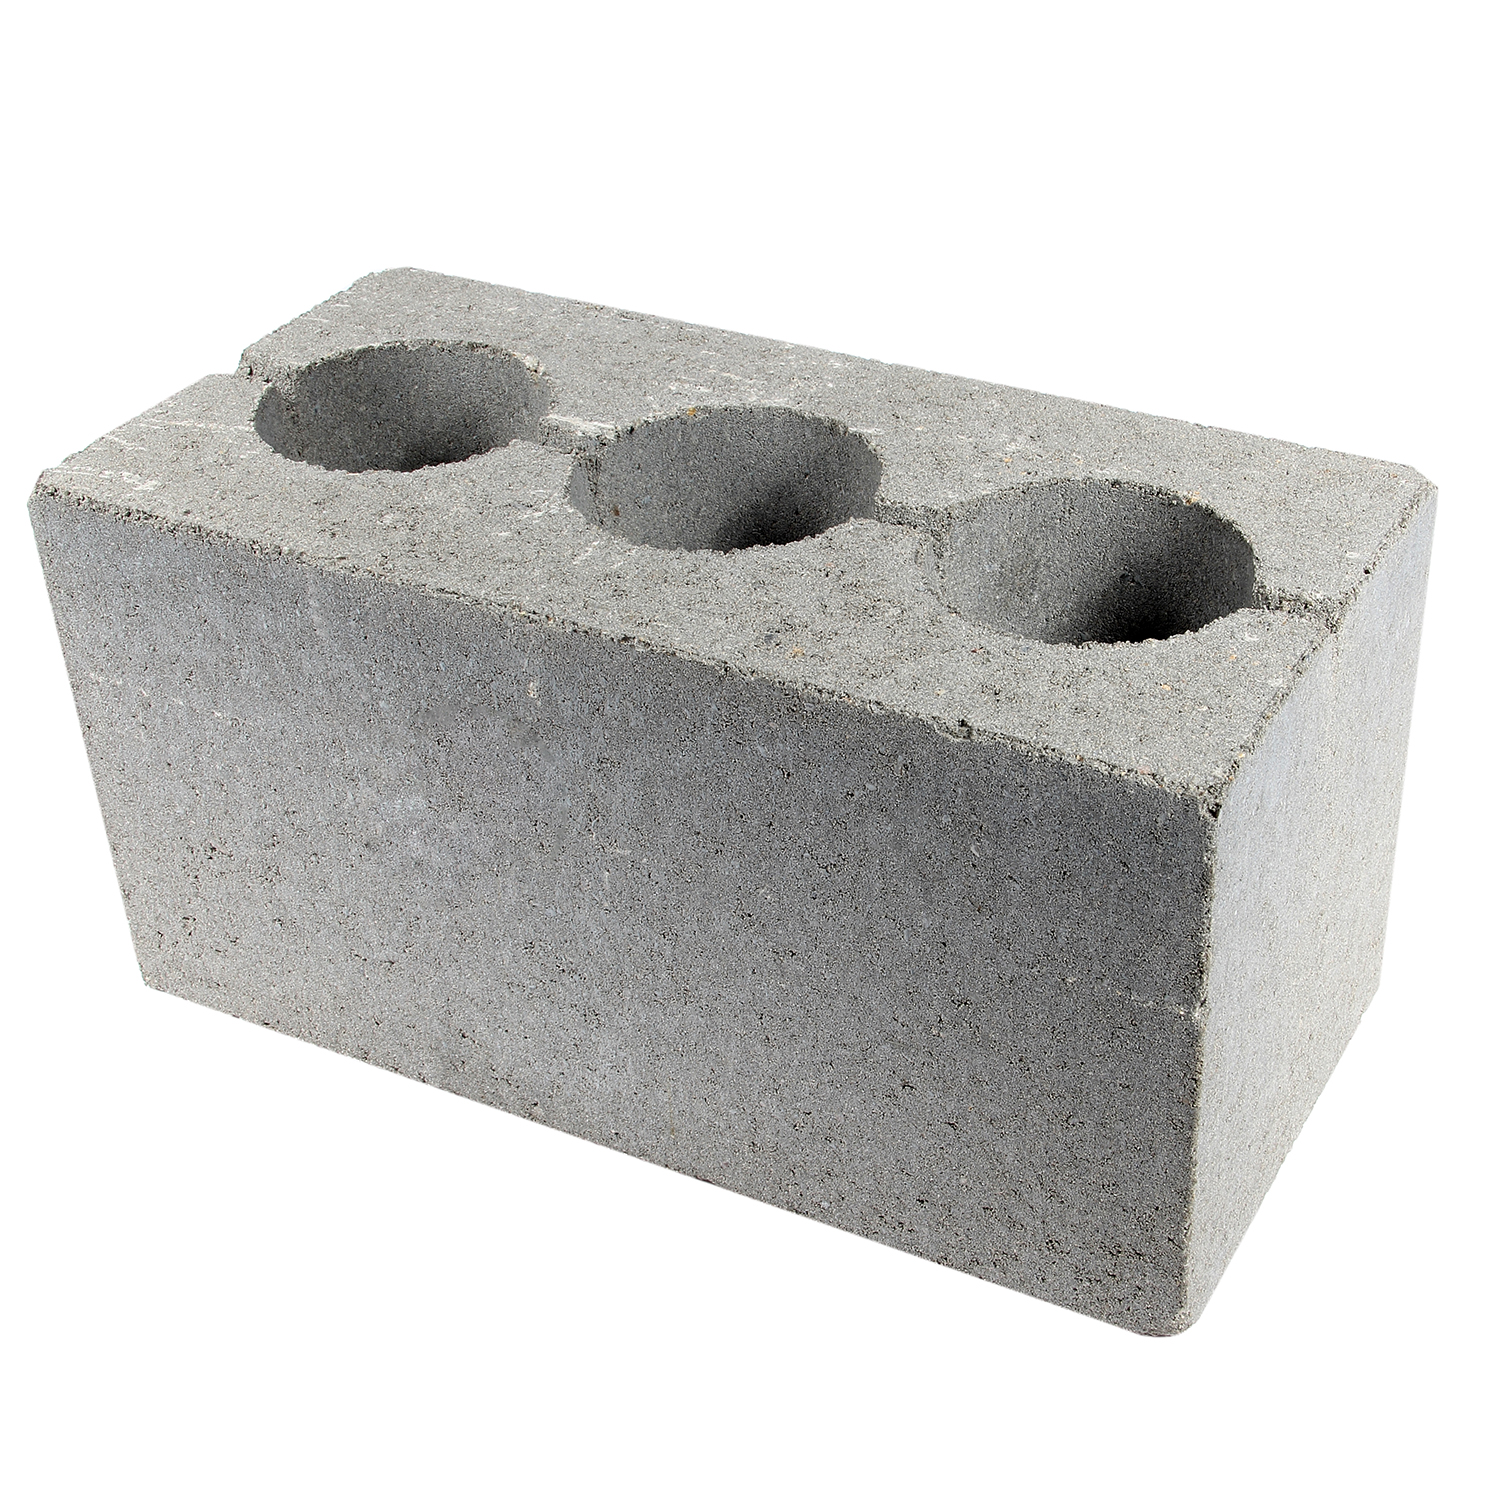 Мелкоштучные стеновые материалы. Блок бетонный 200х200х400 пустотелый. Керамзитный блок 3х пустотный. Двухпустотный бетонный блок. Блок керамзитобетонный 390х190х188.